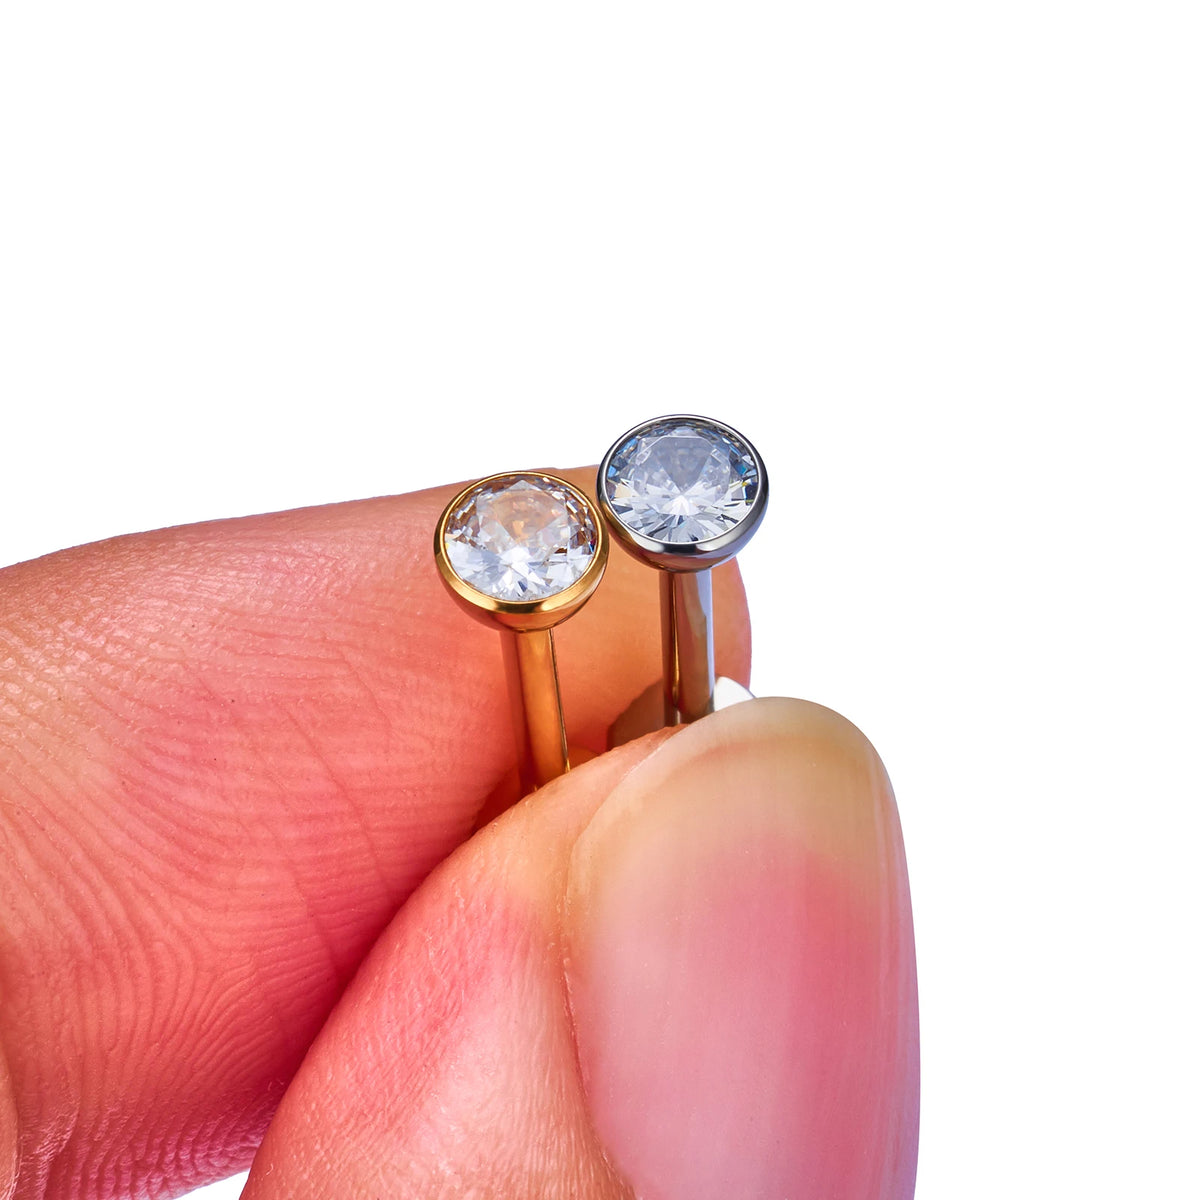 Small monroe piercing with a clear diamond gold monroe piercing titanium labret stud internally threaded